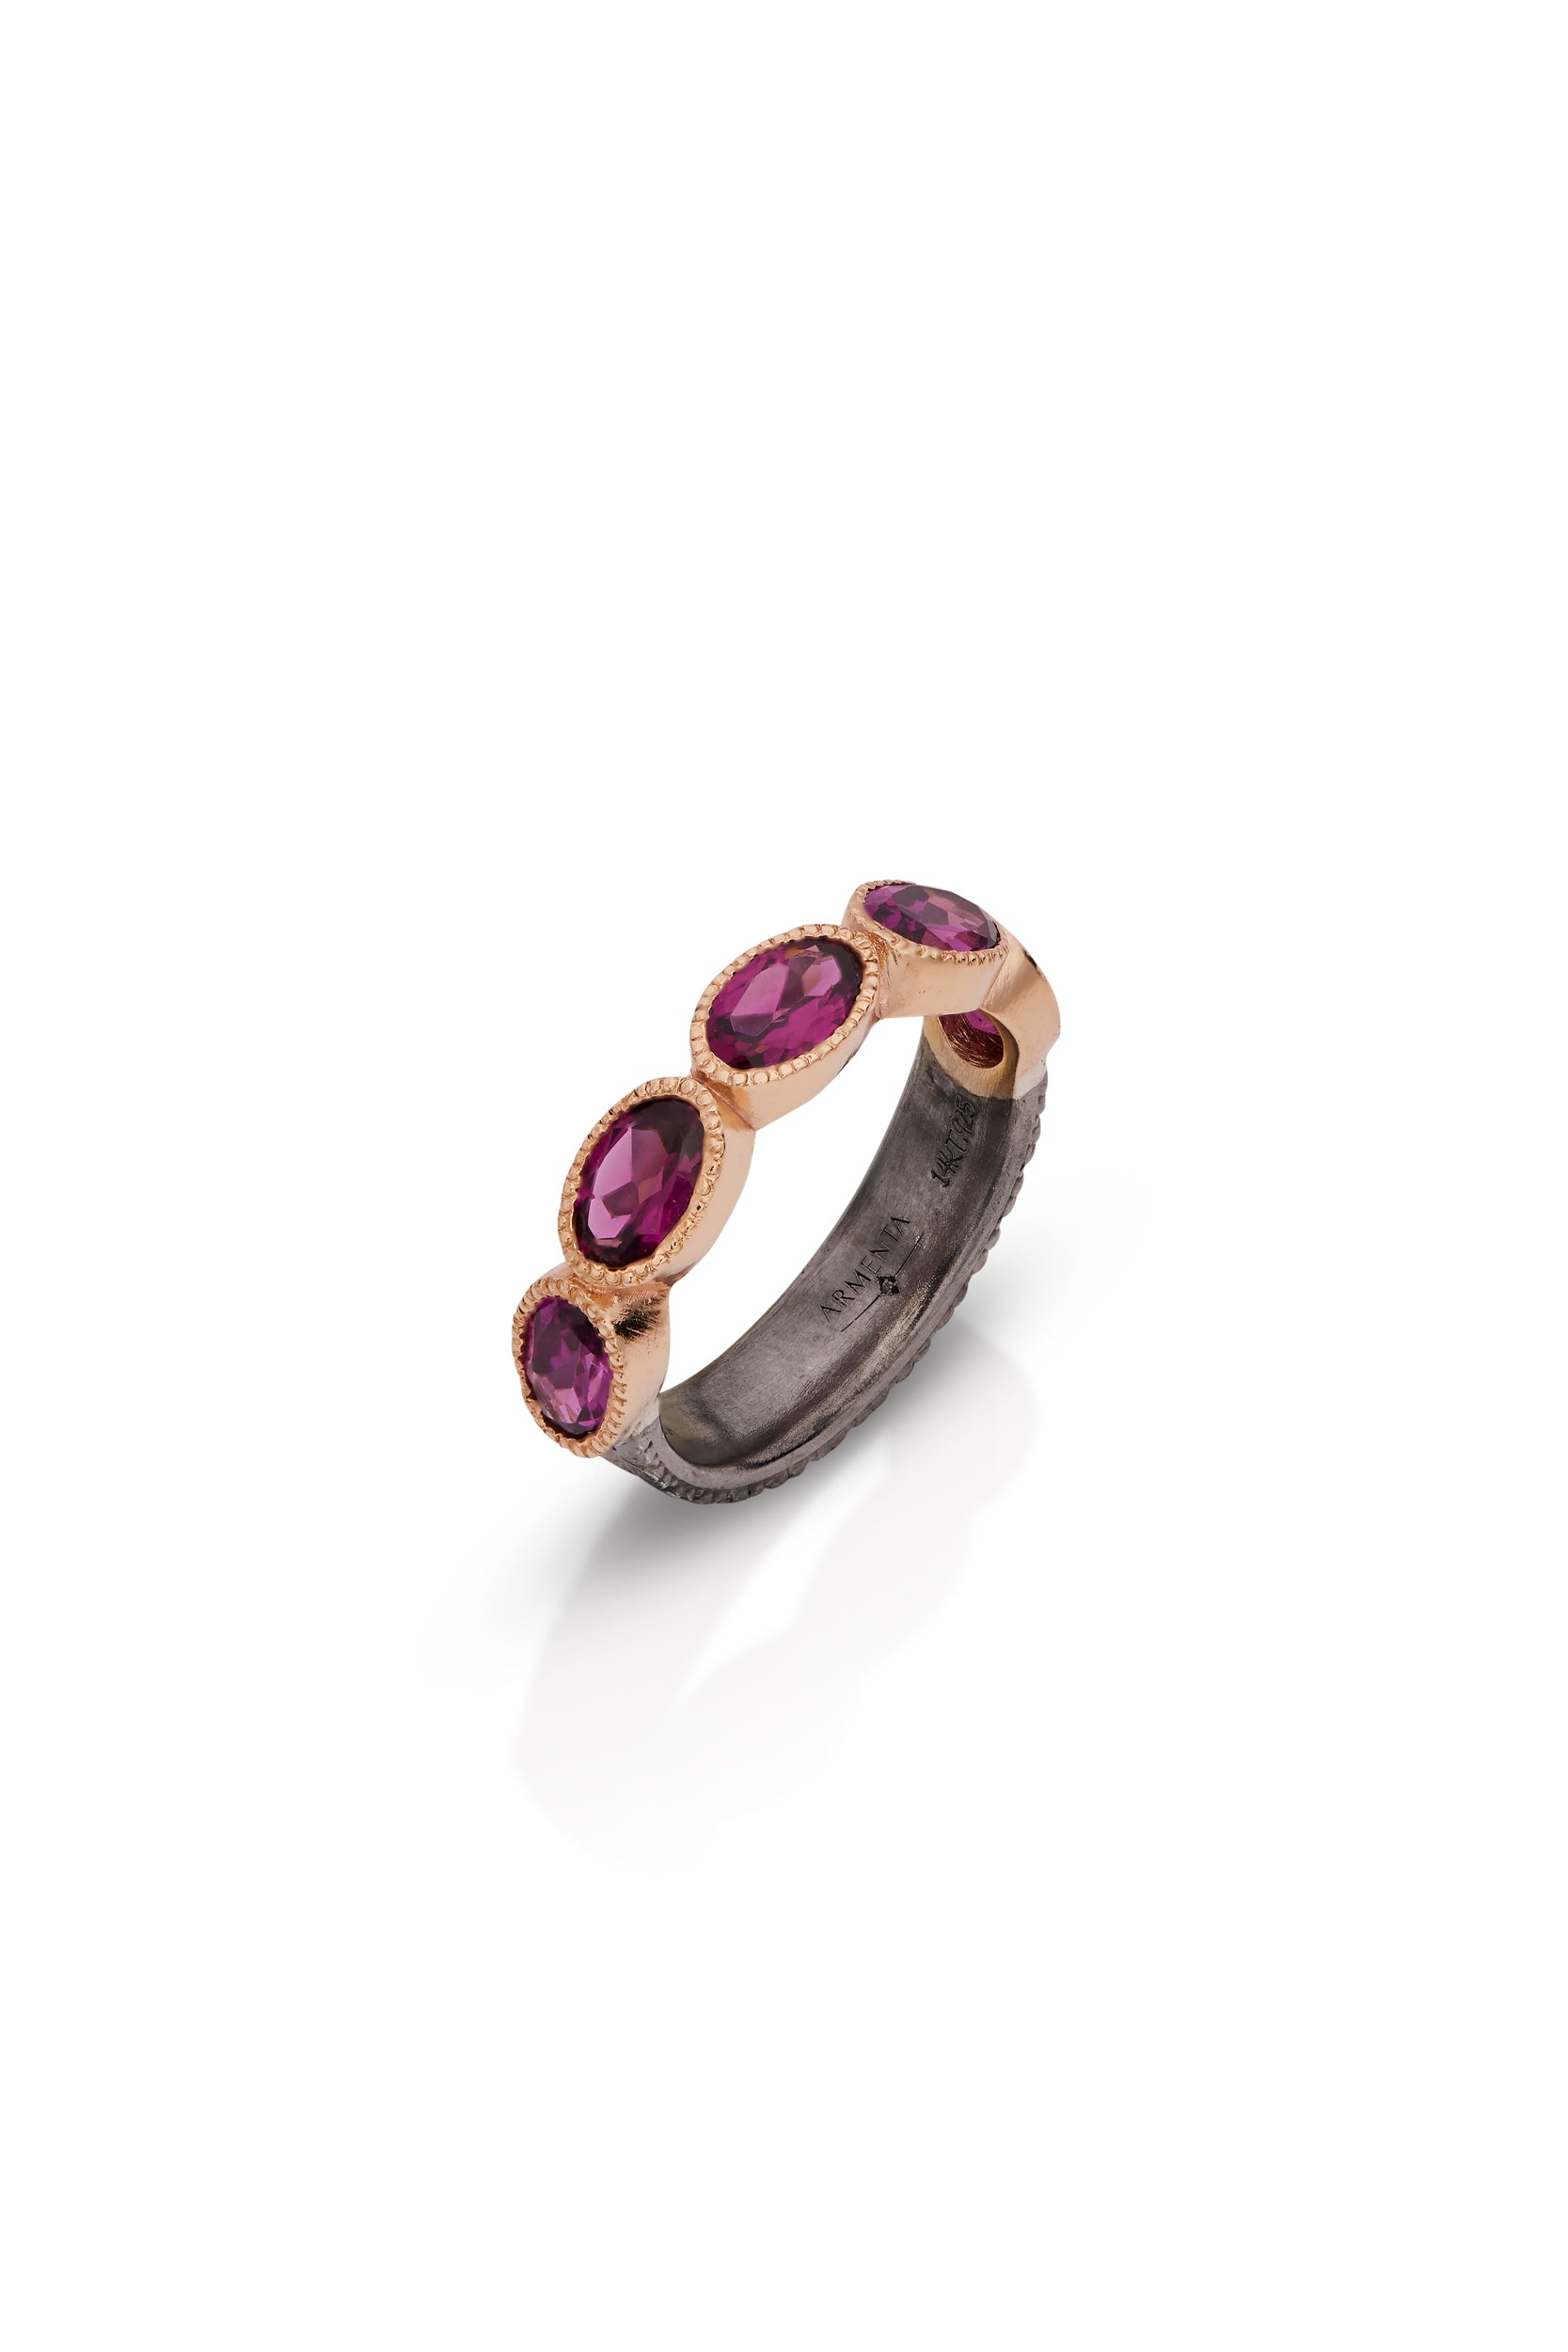 14K Rose Gold with Purple Rhodolite Ring